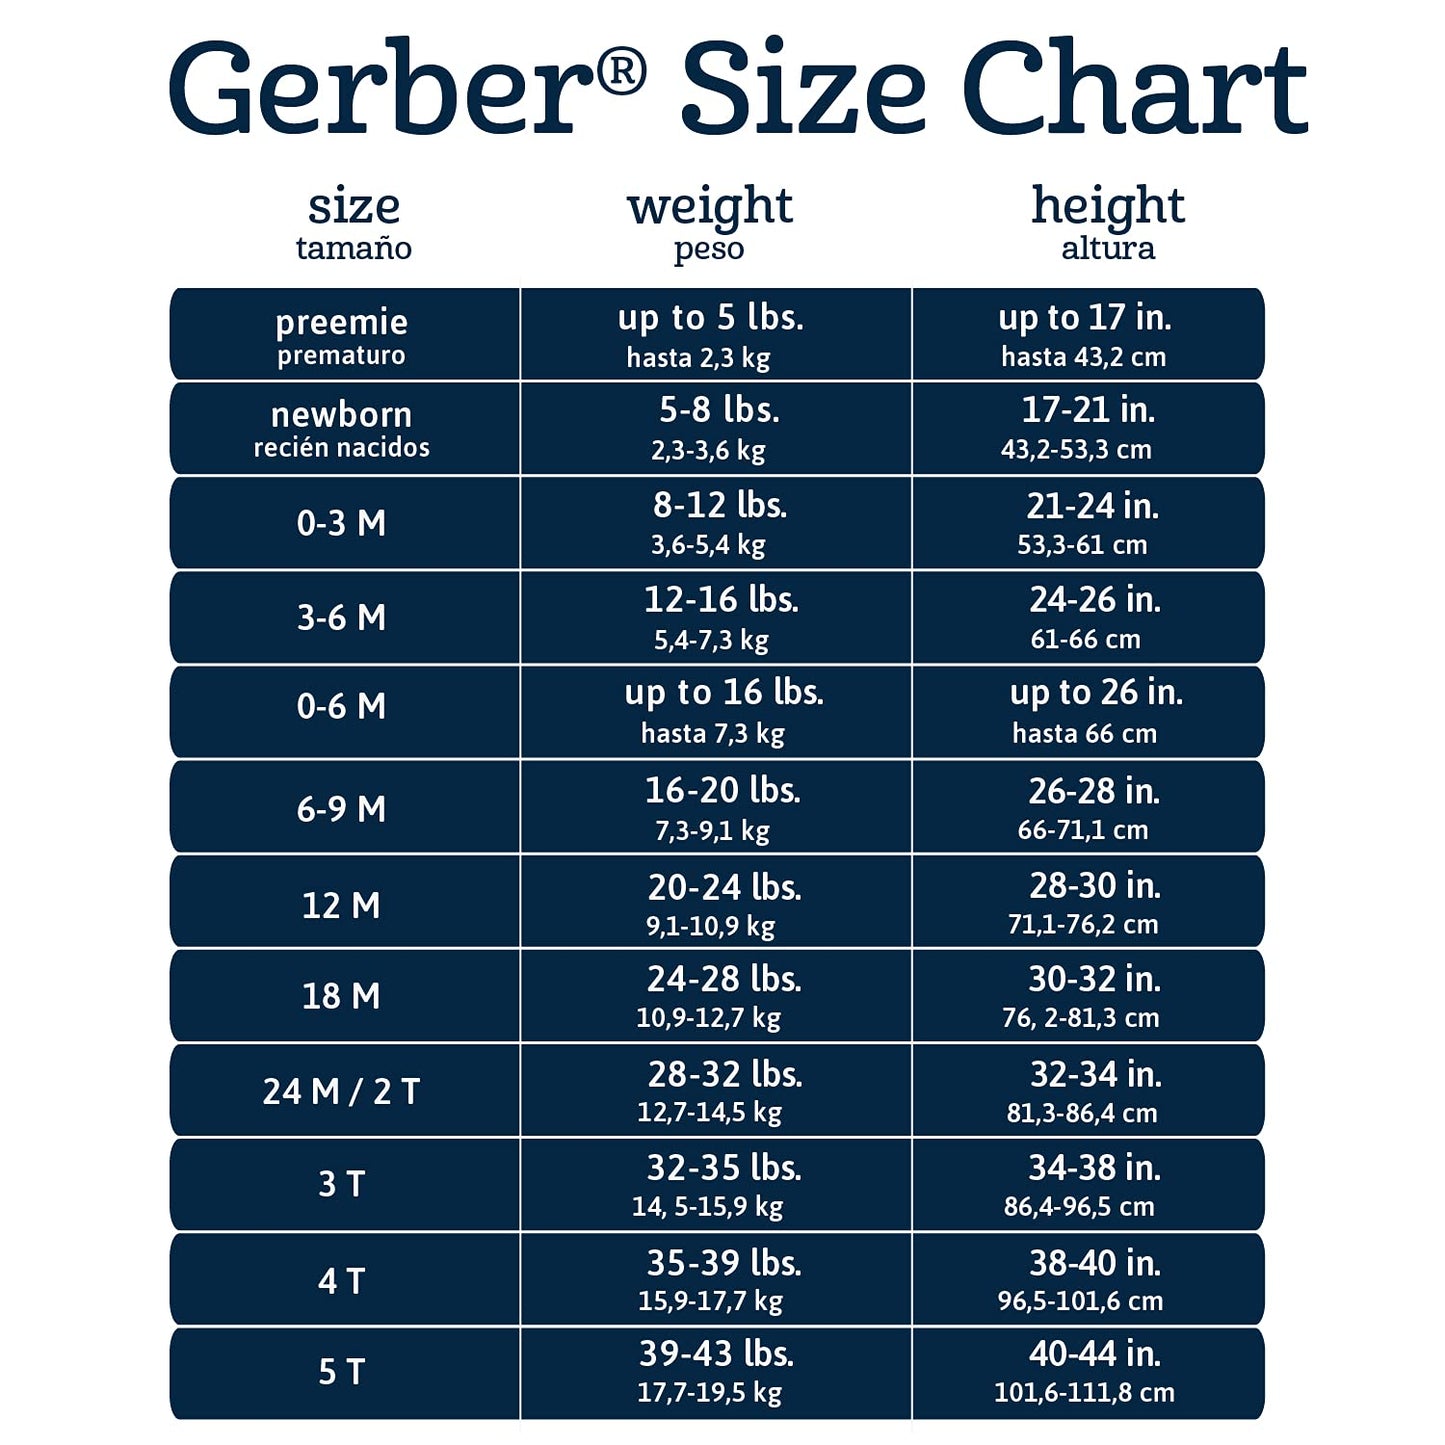 Gerber Baby 8-Pack Short Sleeve Onesies Bodysuits, Solid White, 6-9 Months